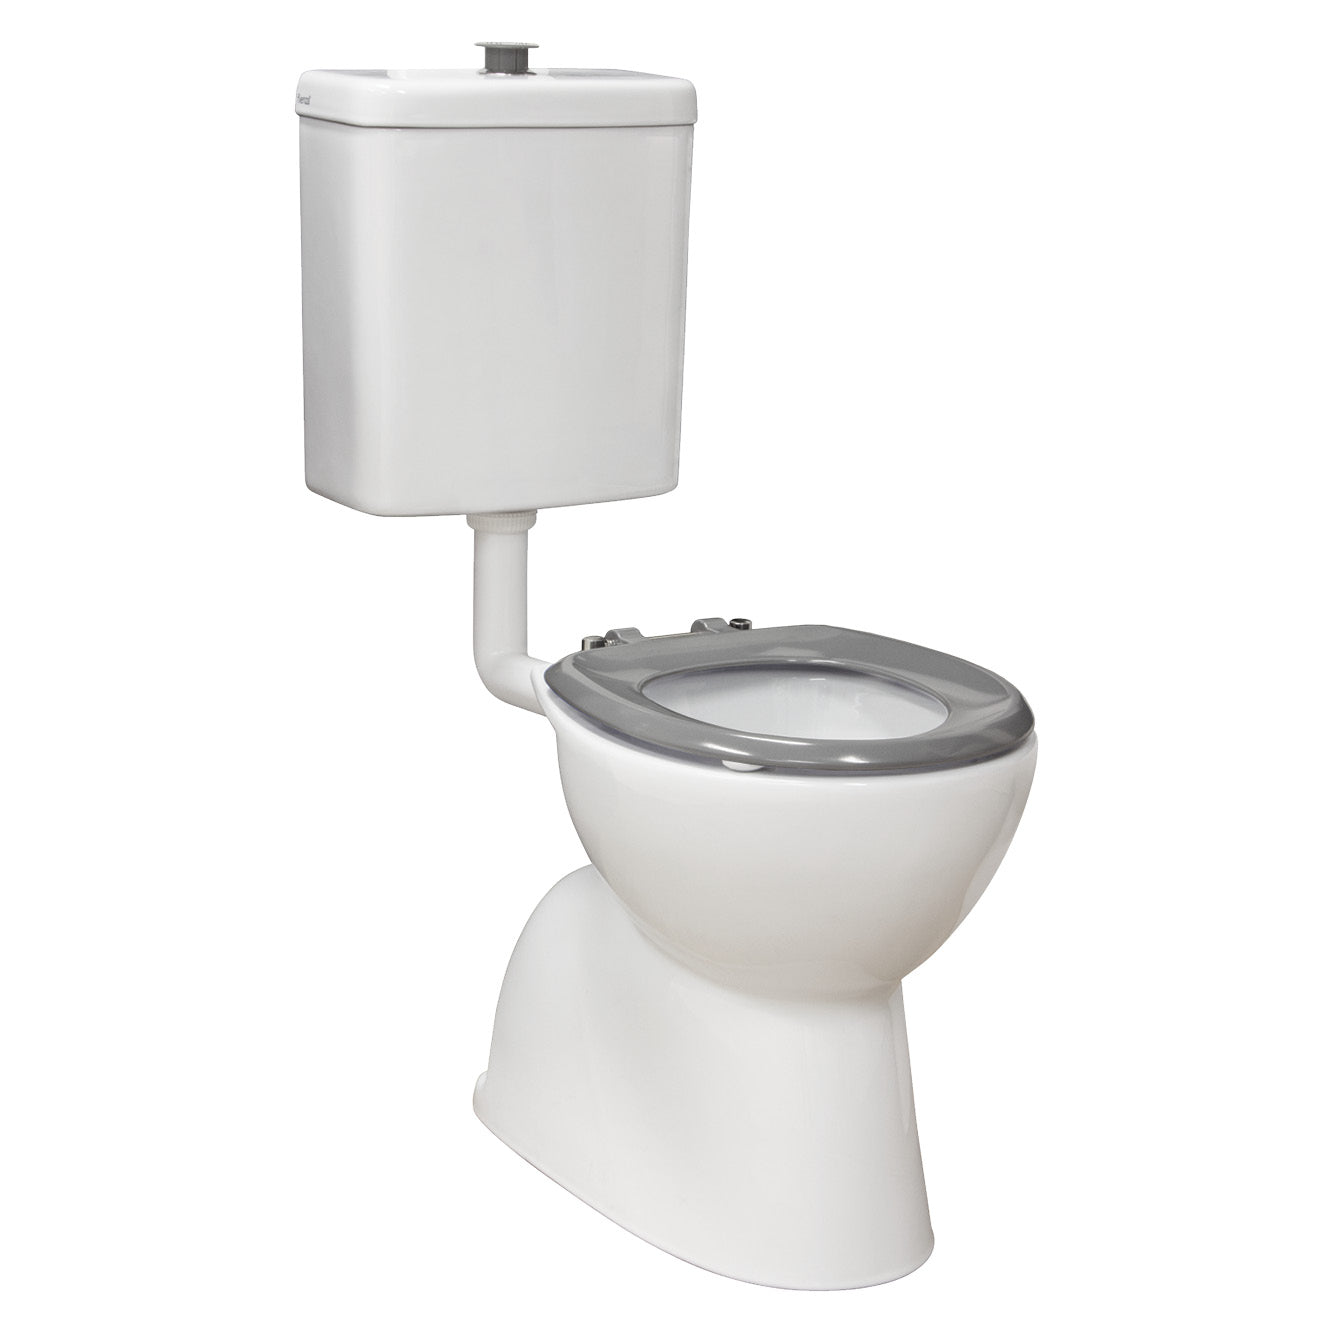 Fienza Stella Care Adjustable Link Toilet Suite